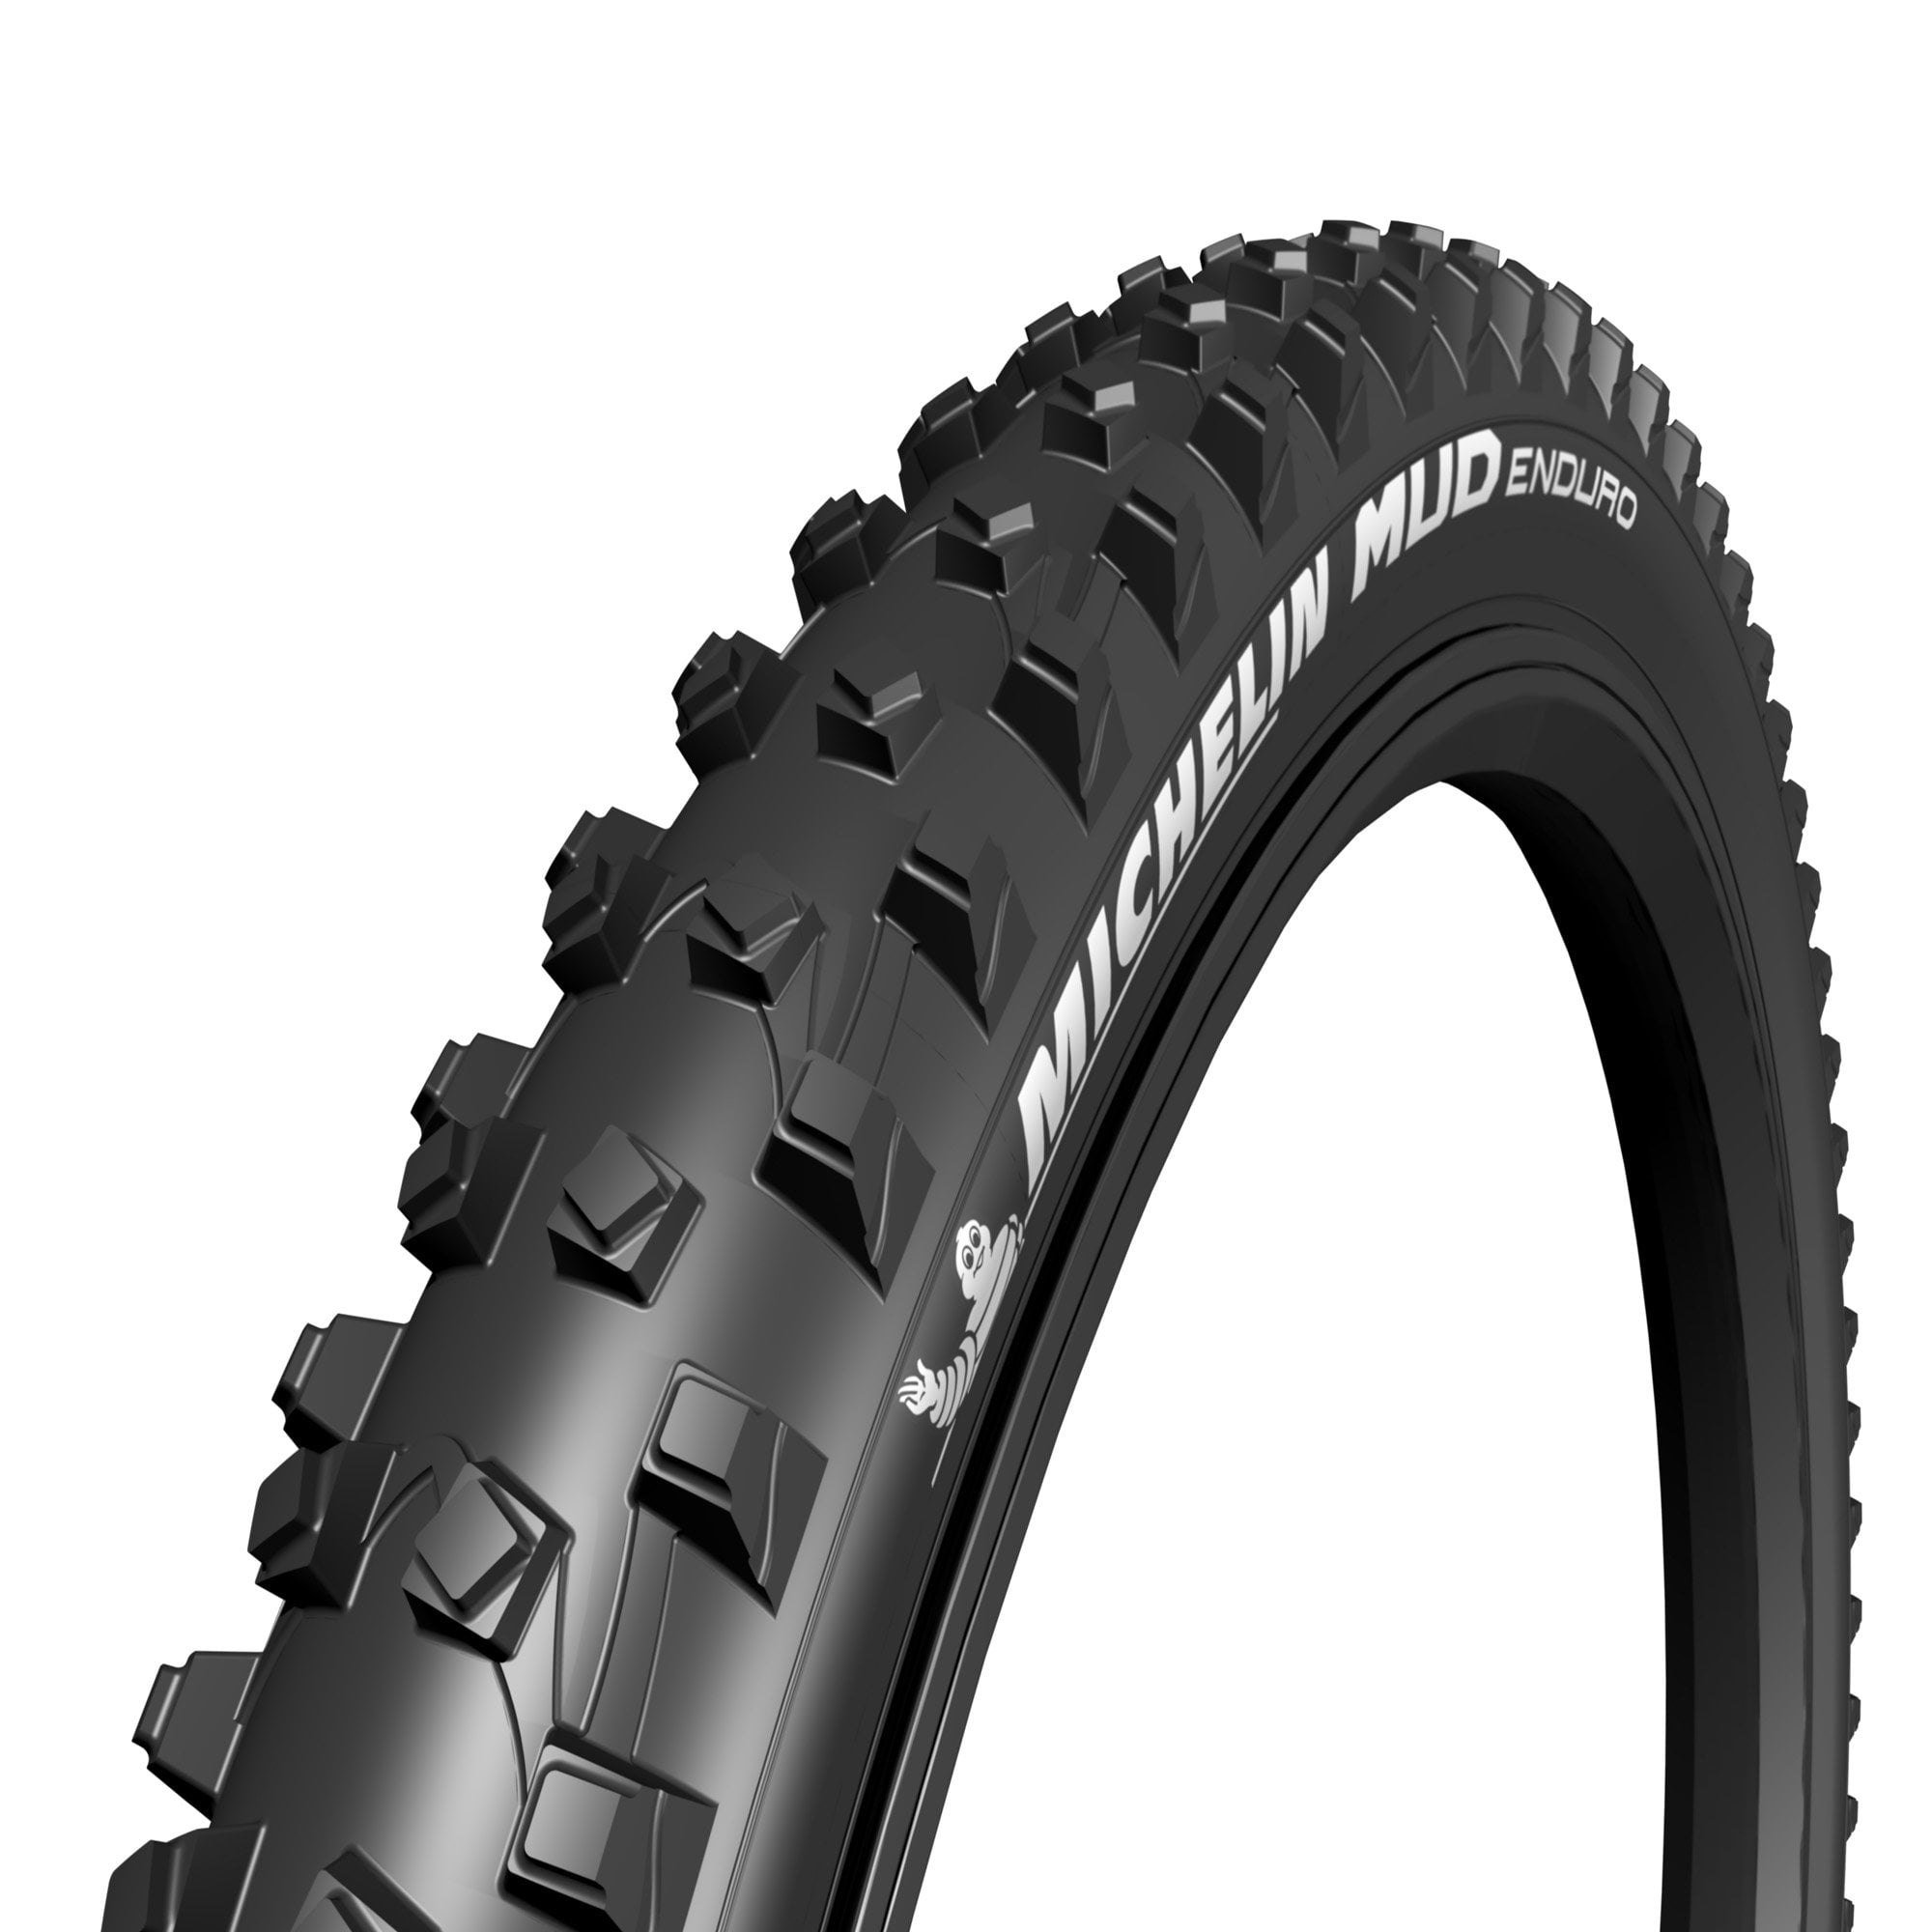 Michelin Mud Enduro Tyre - 27.5x 2.25